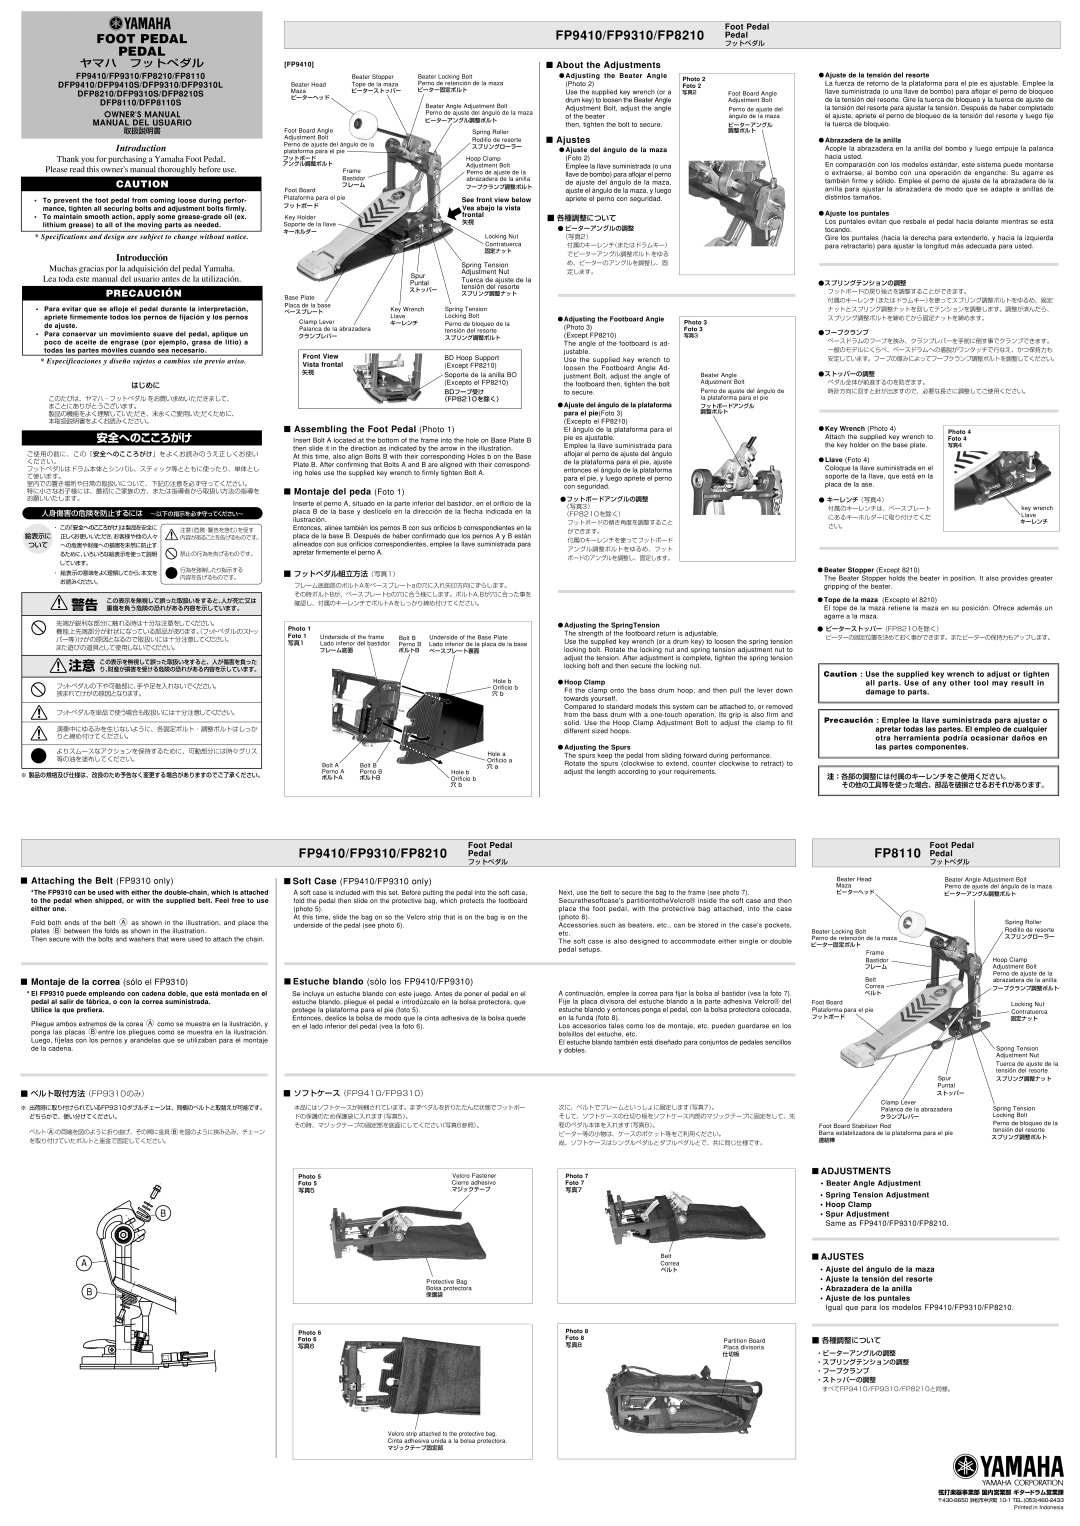 Yamaha owner manual Foot Pedal Pedal, FP9410/FP9310/FP8210 Pedal, FP8110 Pedal, 安全へのこころがけ, ヤマハ フットペダル, Introduction 